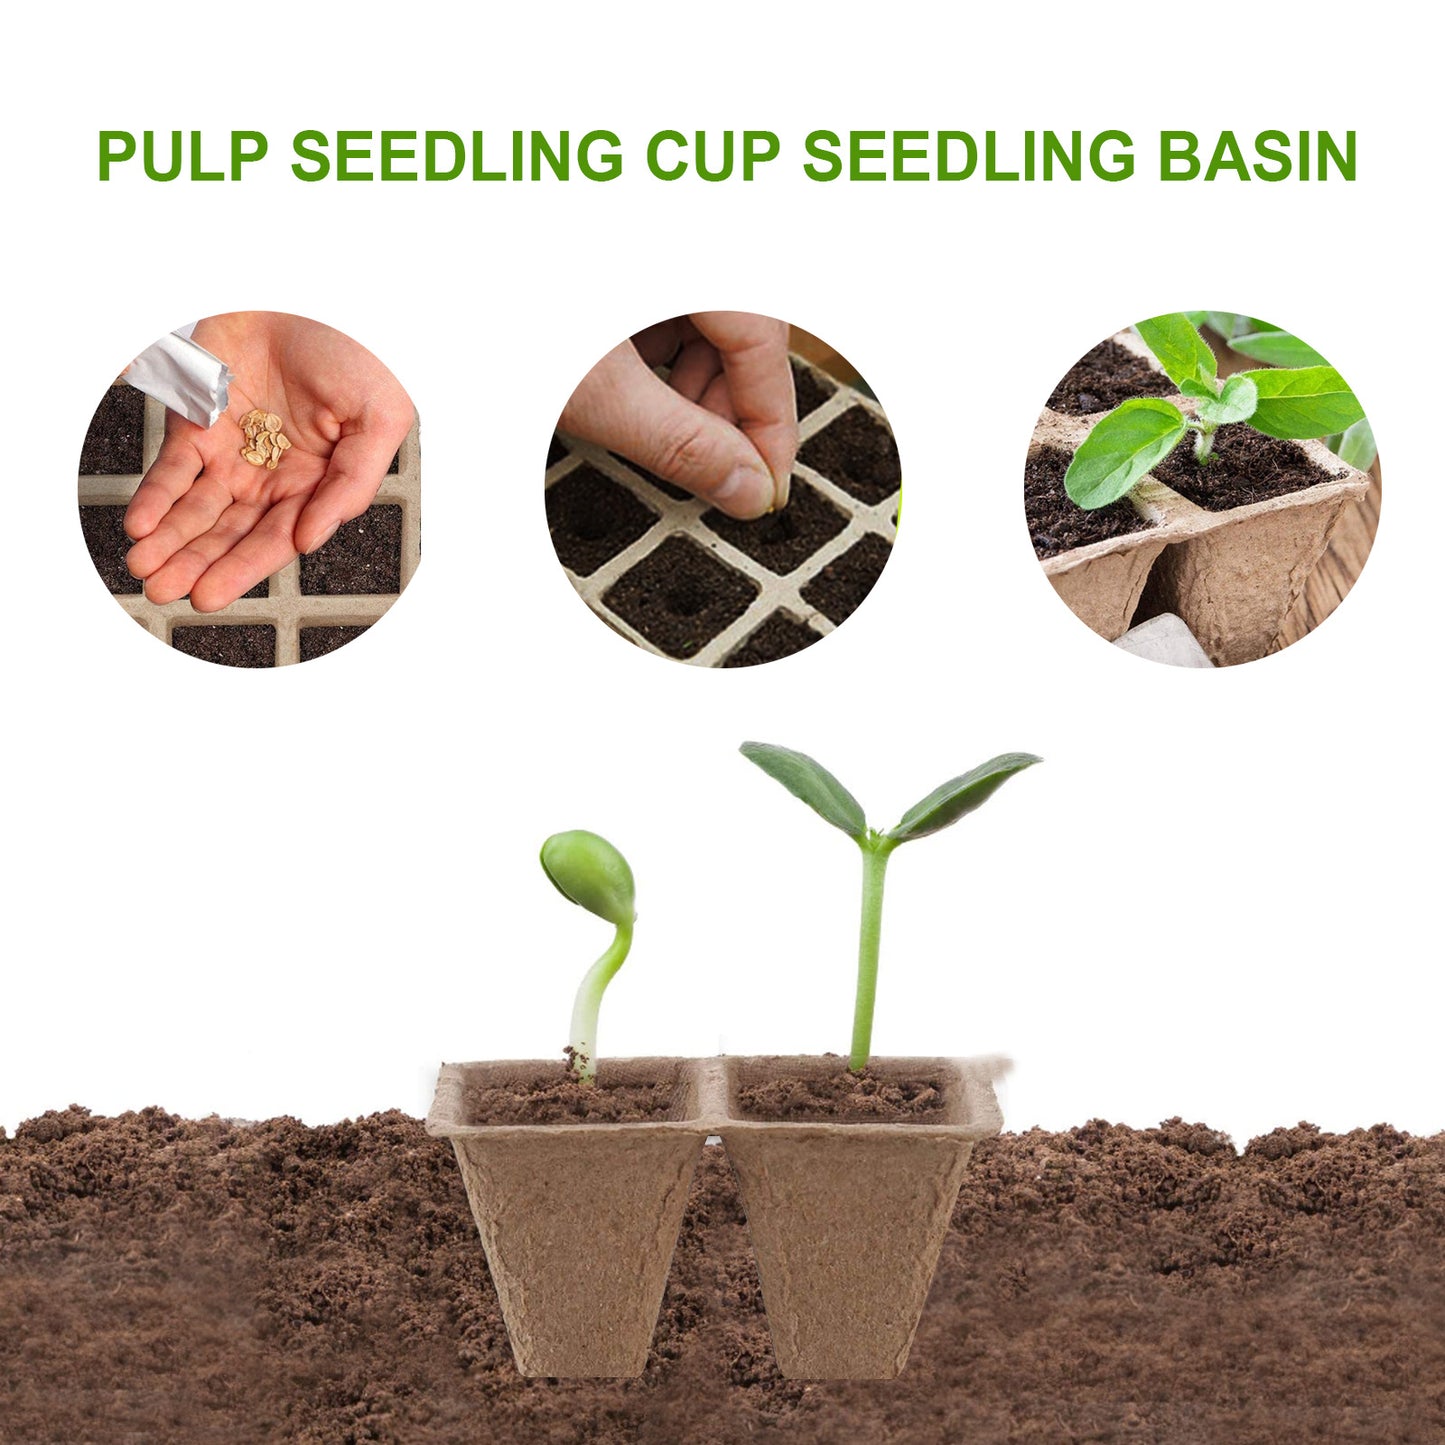 Biodegradable Eco-Friendly Seedling Nursery Tray 12-Hole